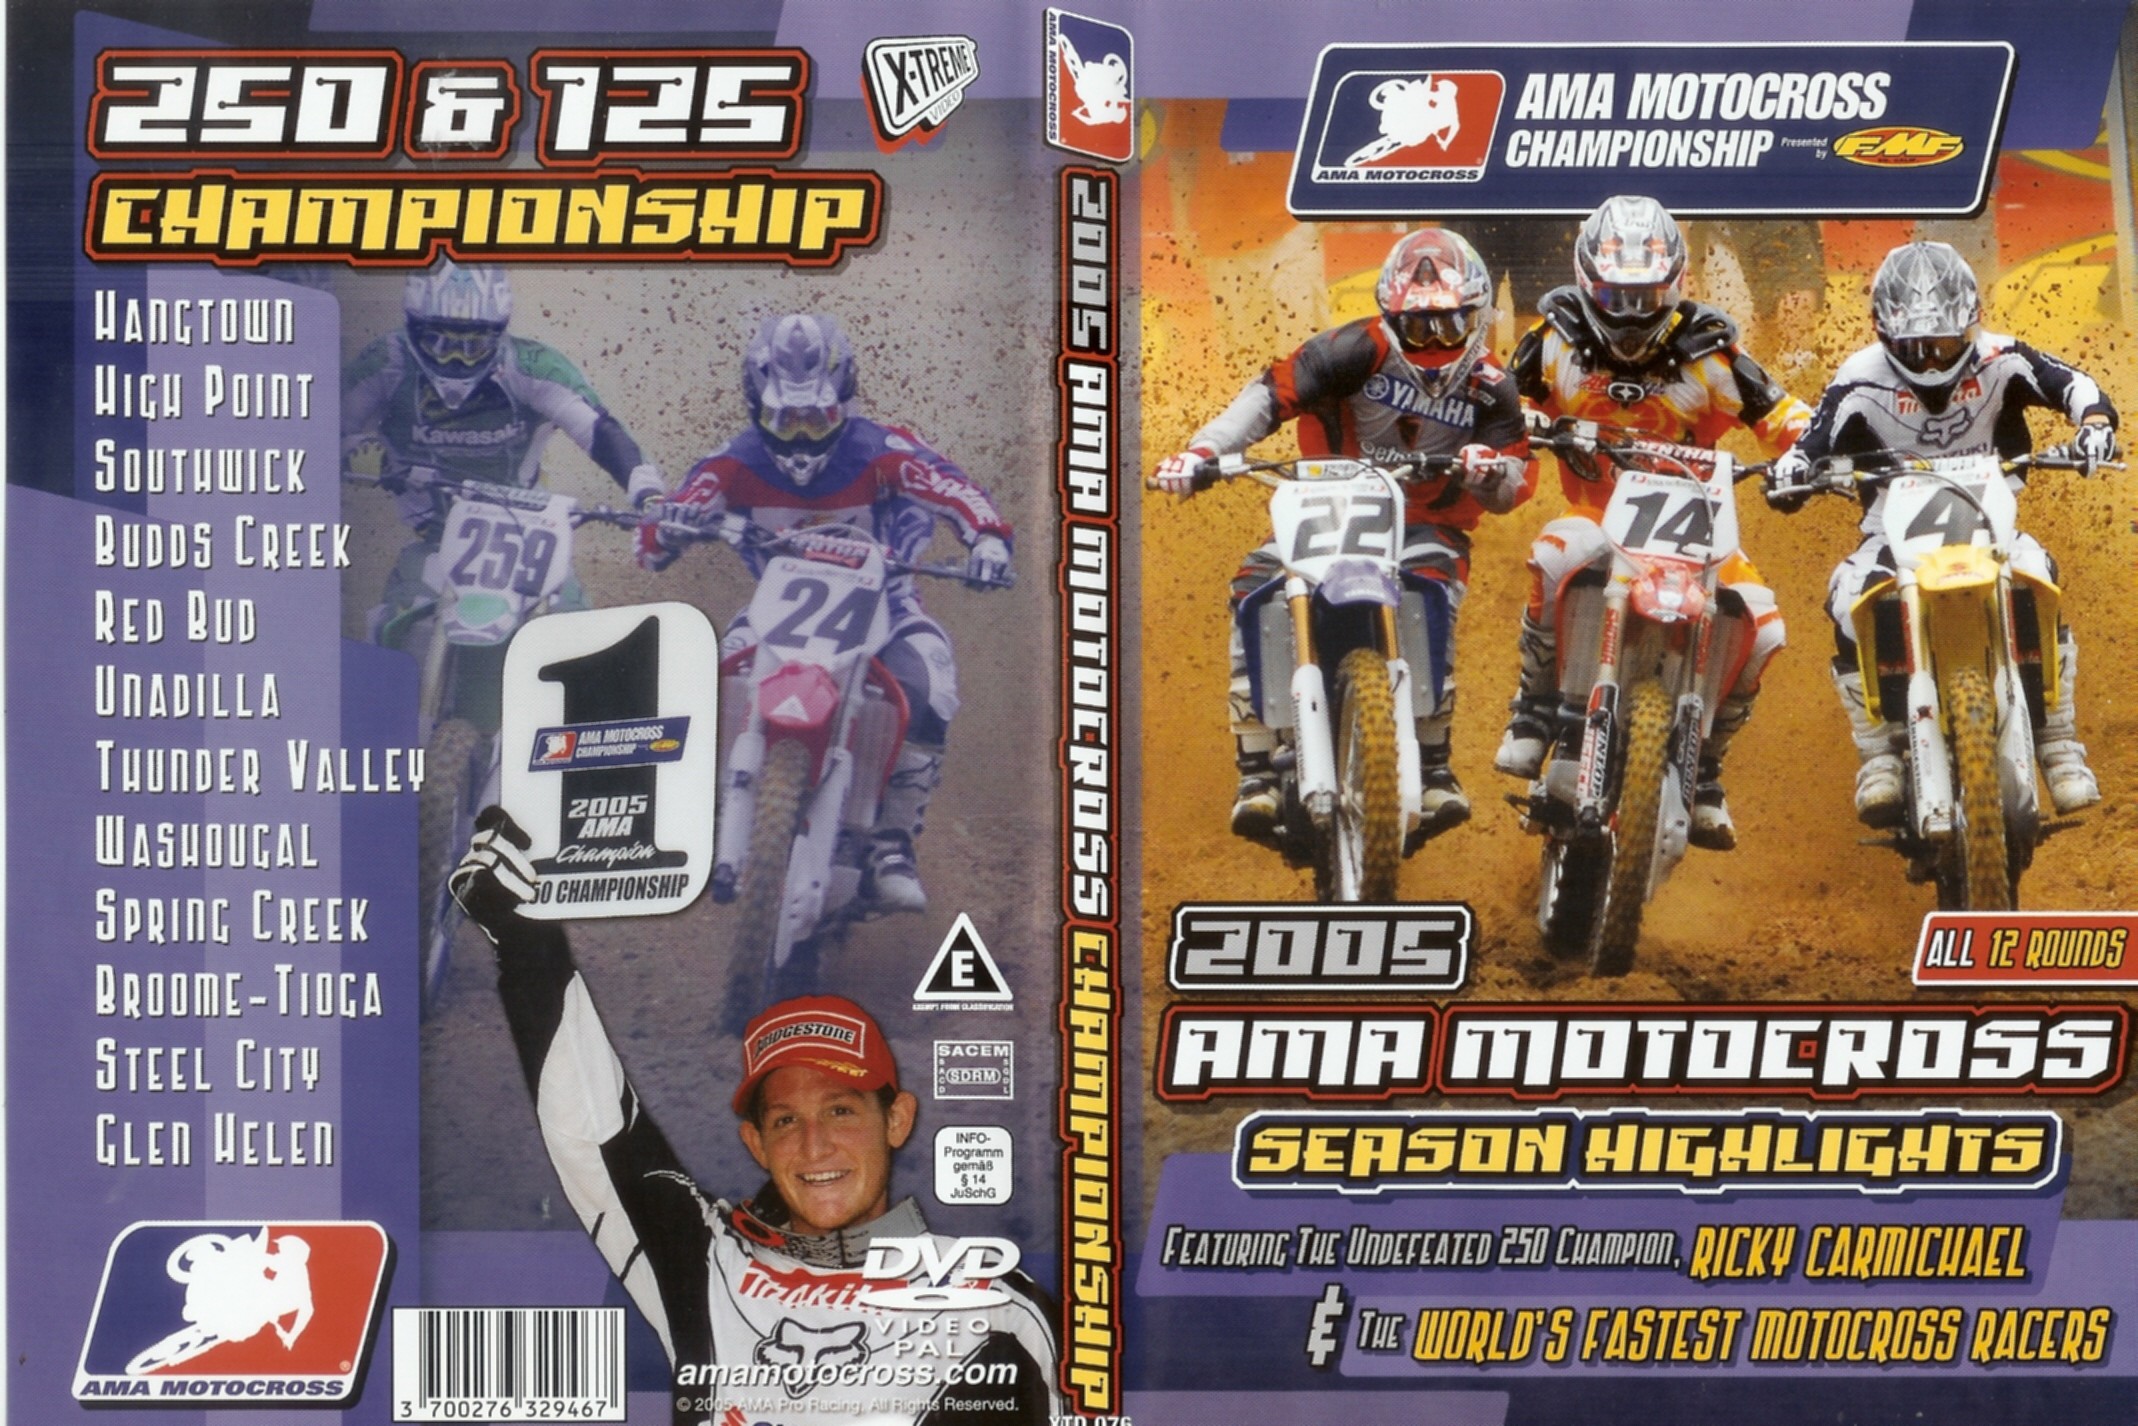 Jaquette DVD AMA motocross 2005